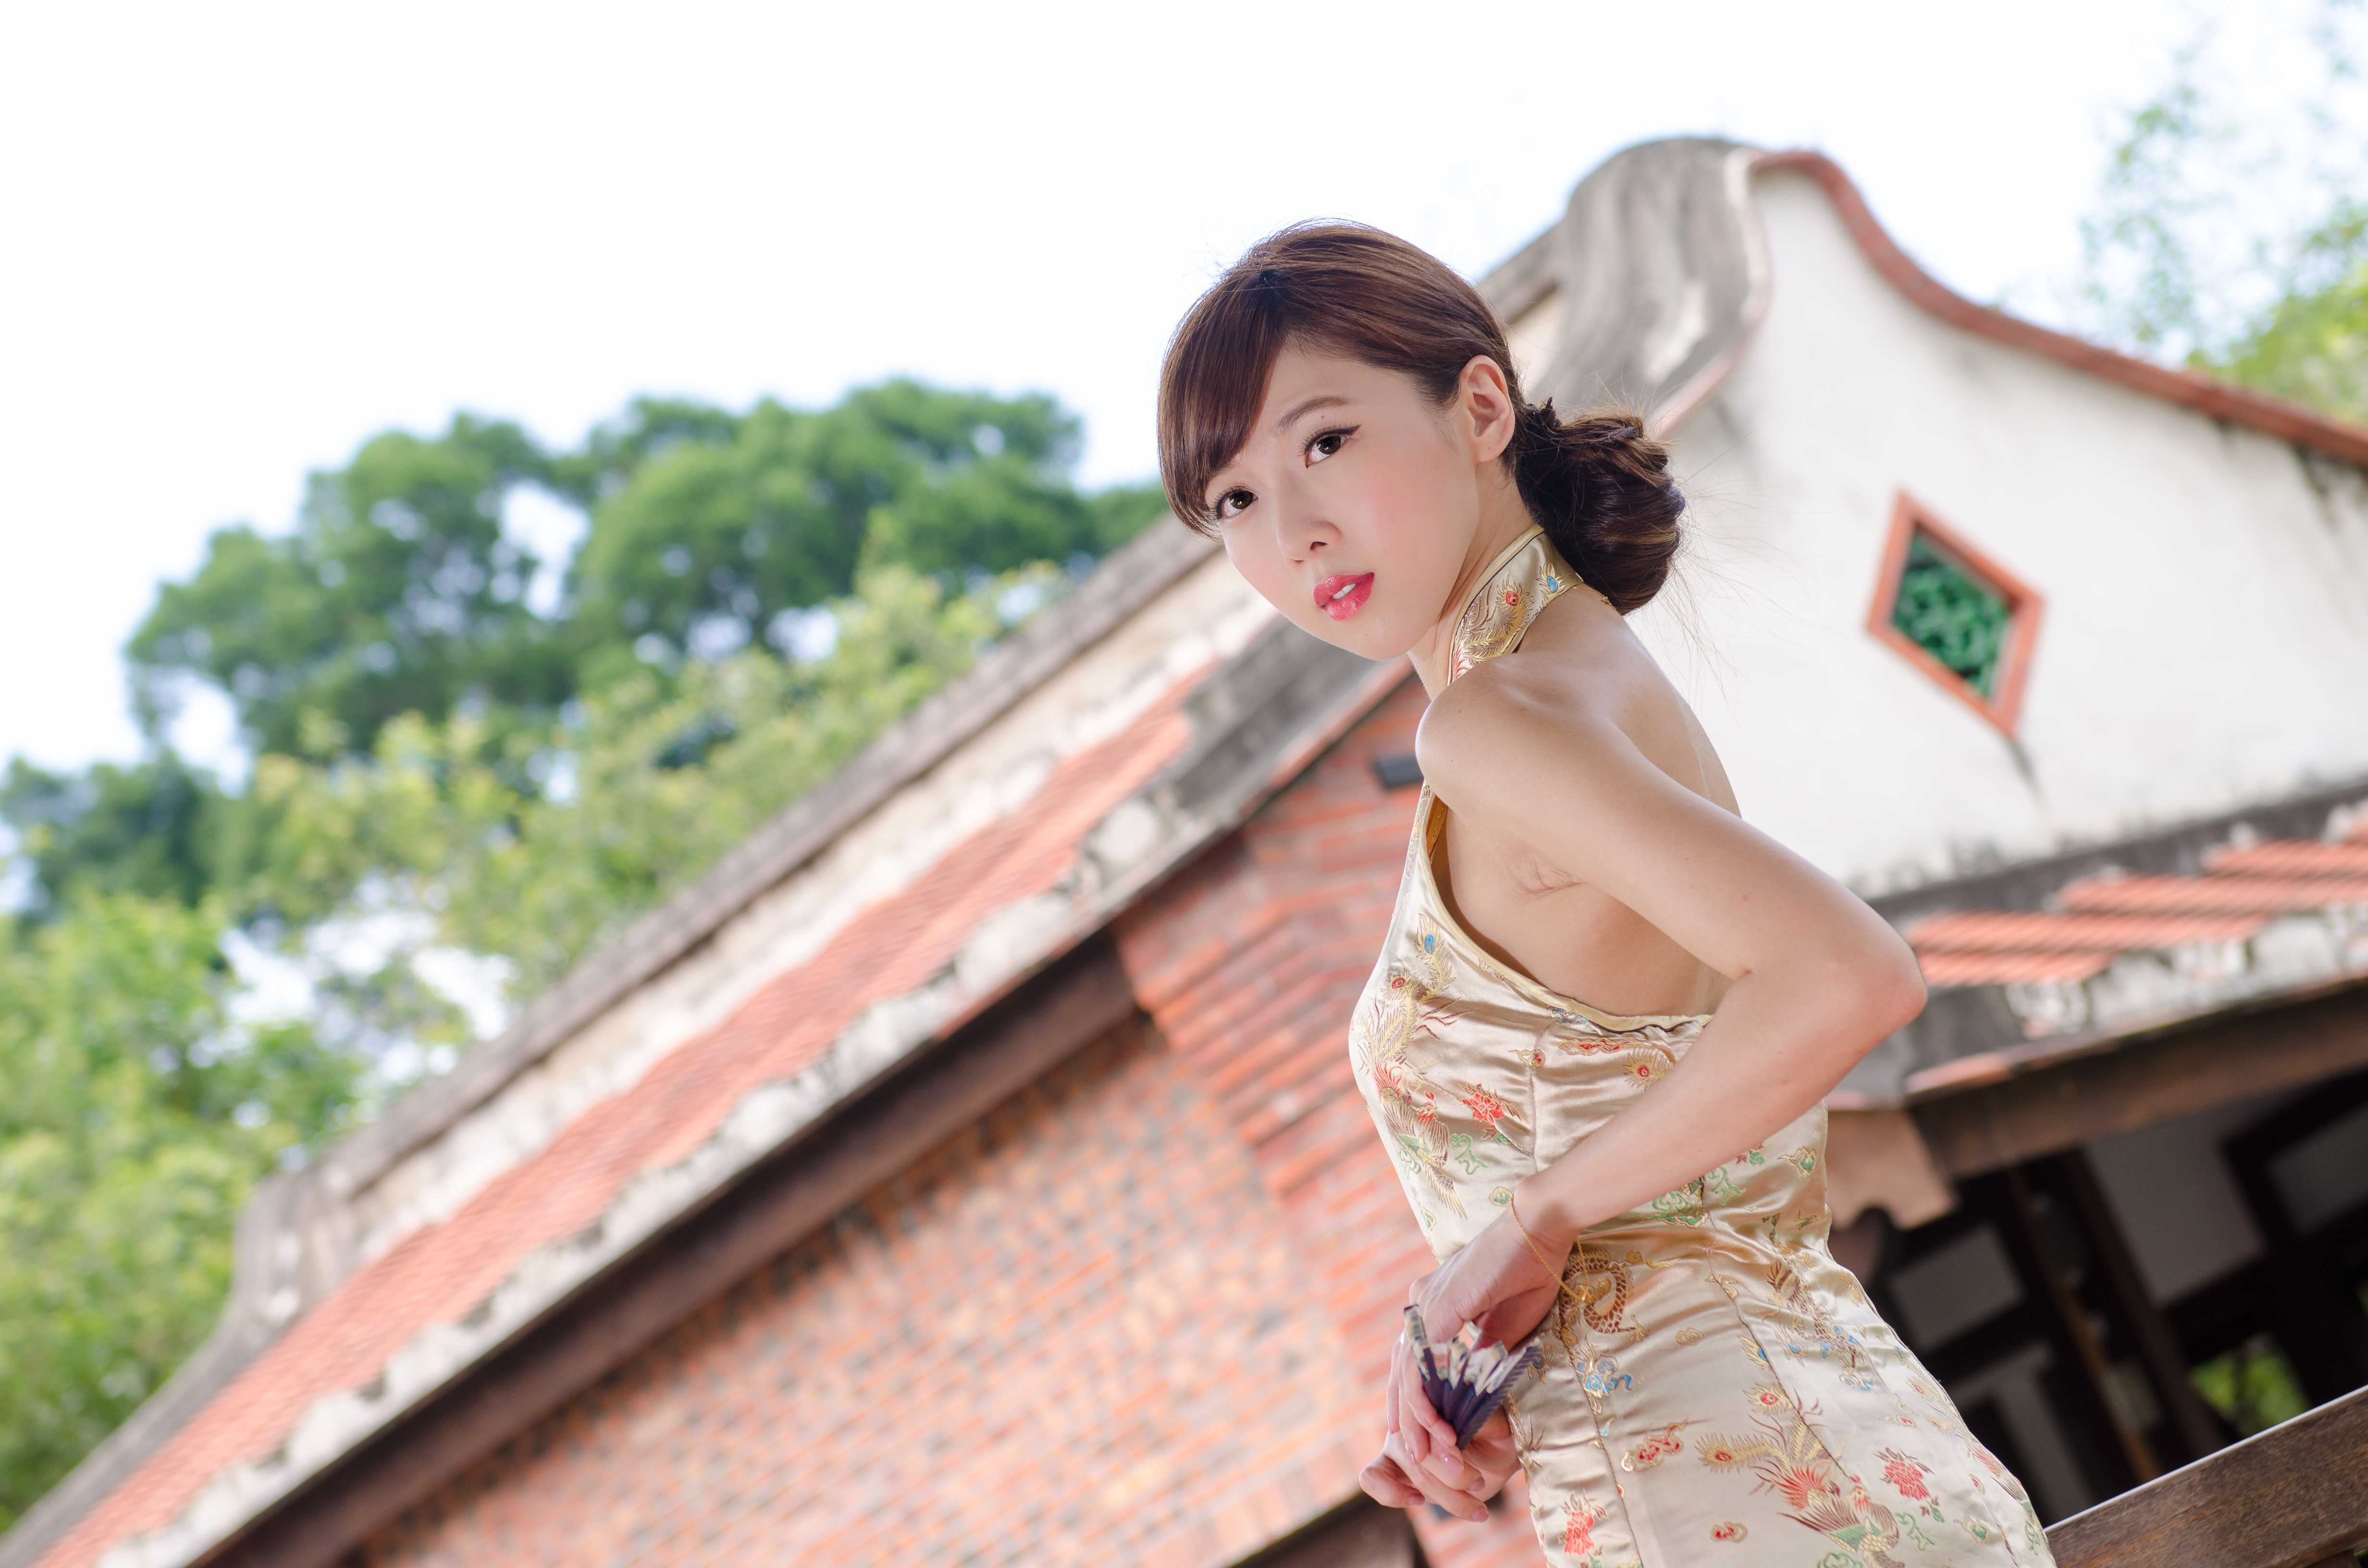 women, chén qiáoqiáo, asian, fan, lin antai historical home, model, taiwanese 5K